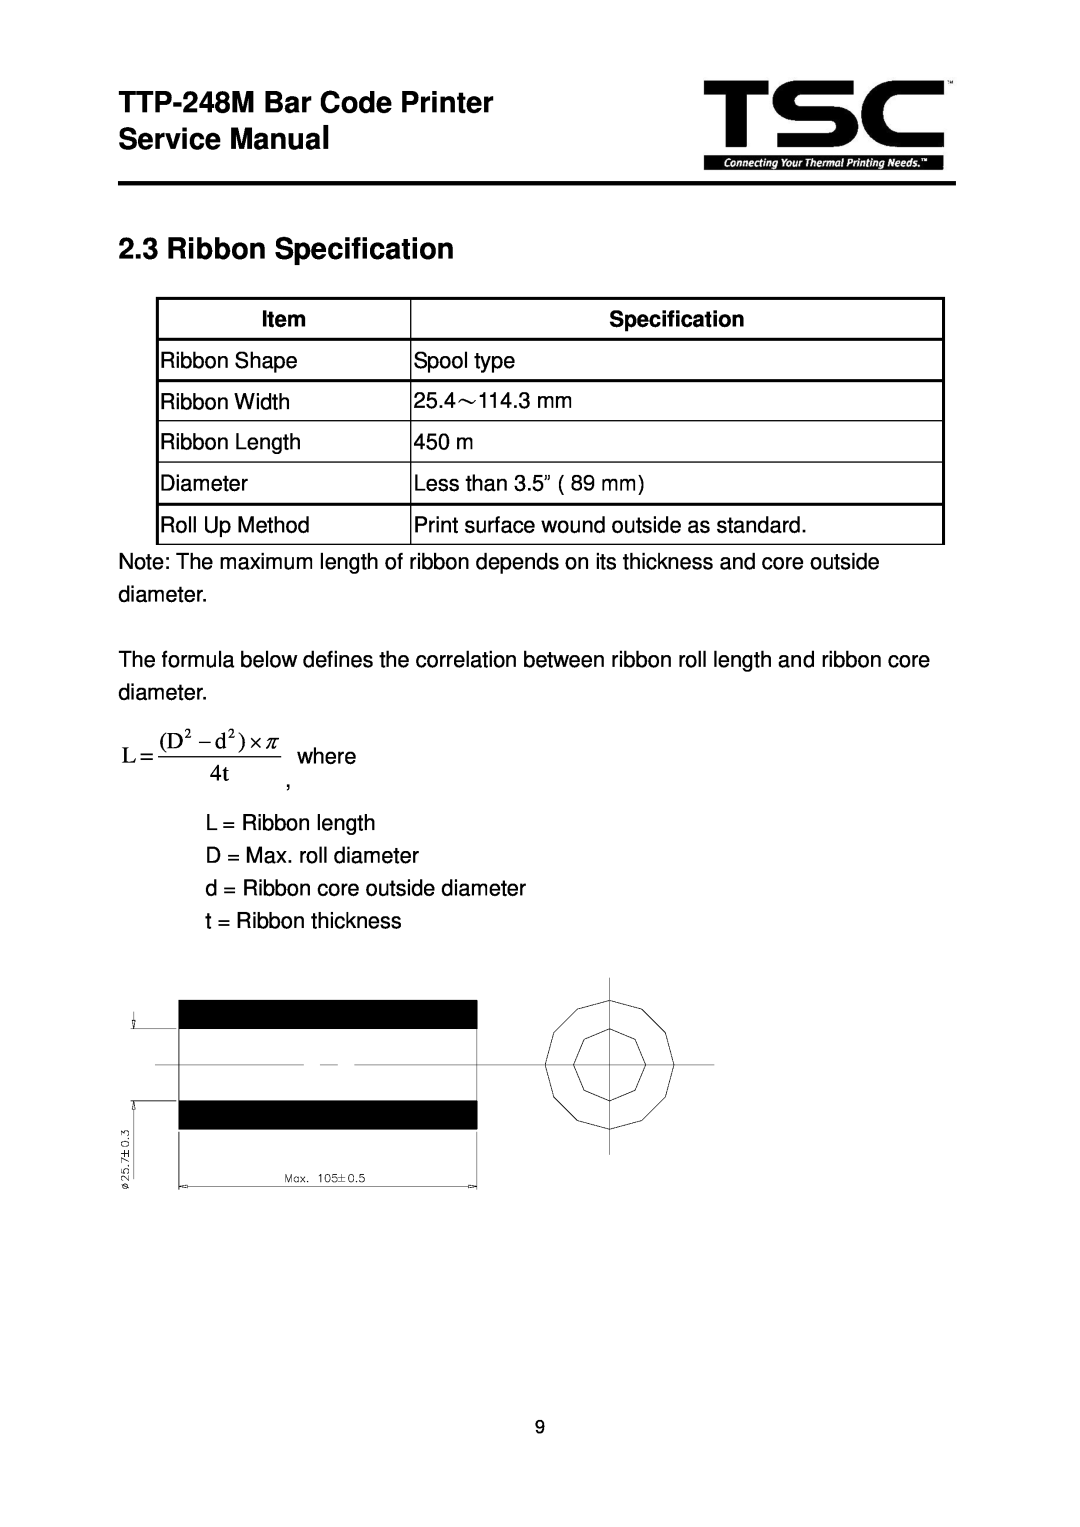 The Speaker Company TTP 248M service manual TTP-248M Bar Code Printer Service Manual 2.3 Ribbon Specification 